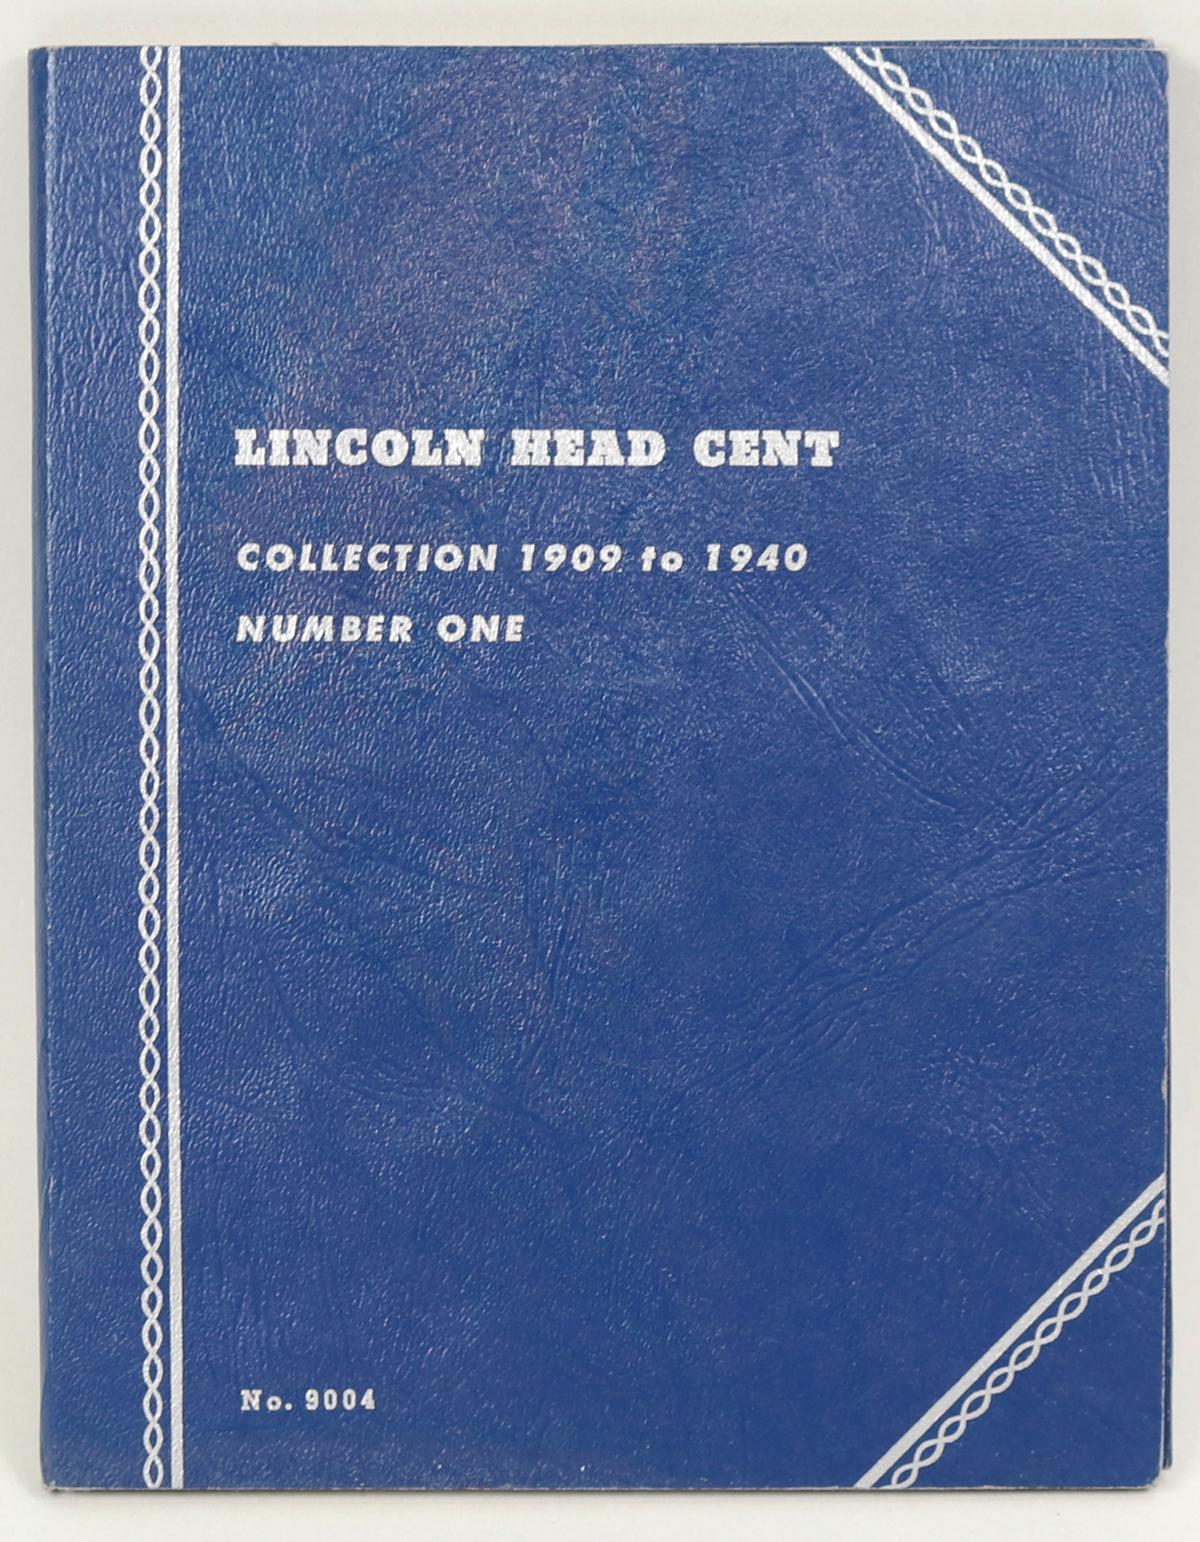 2 Lincoln Head Cent Books & Jefferson Nickel Book, incomplete